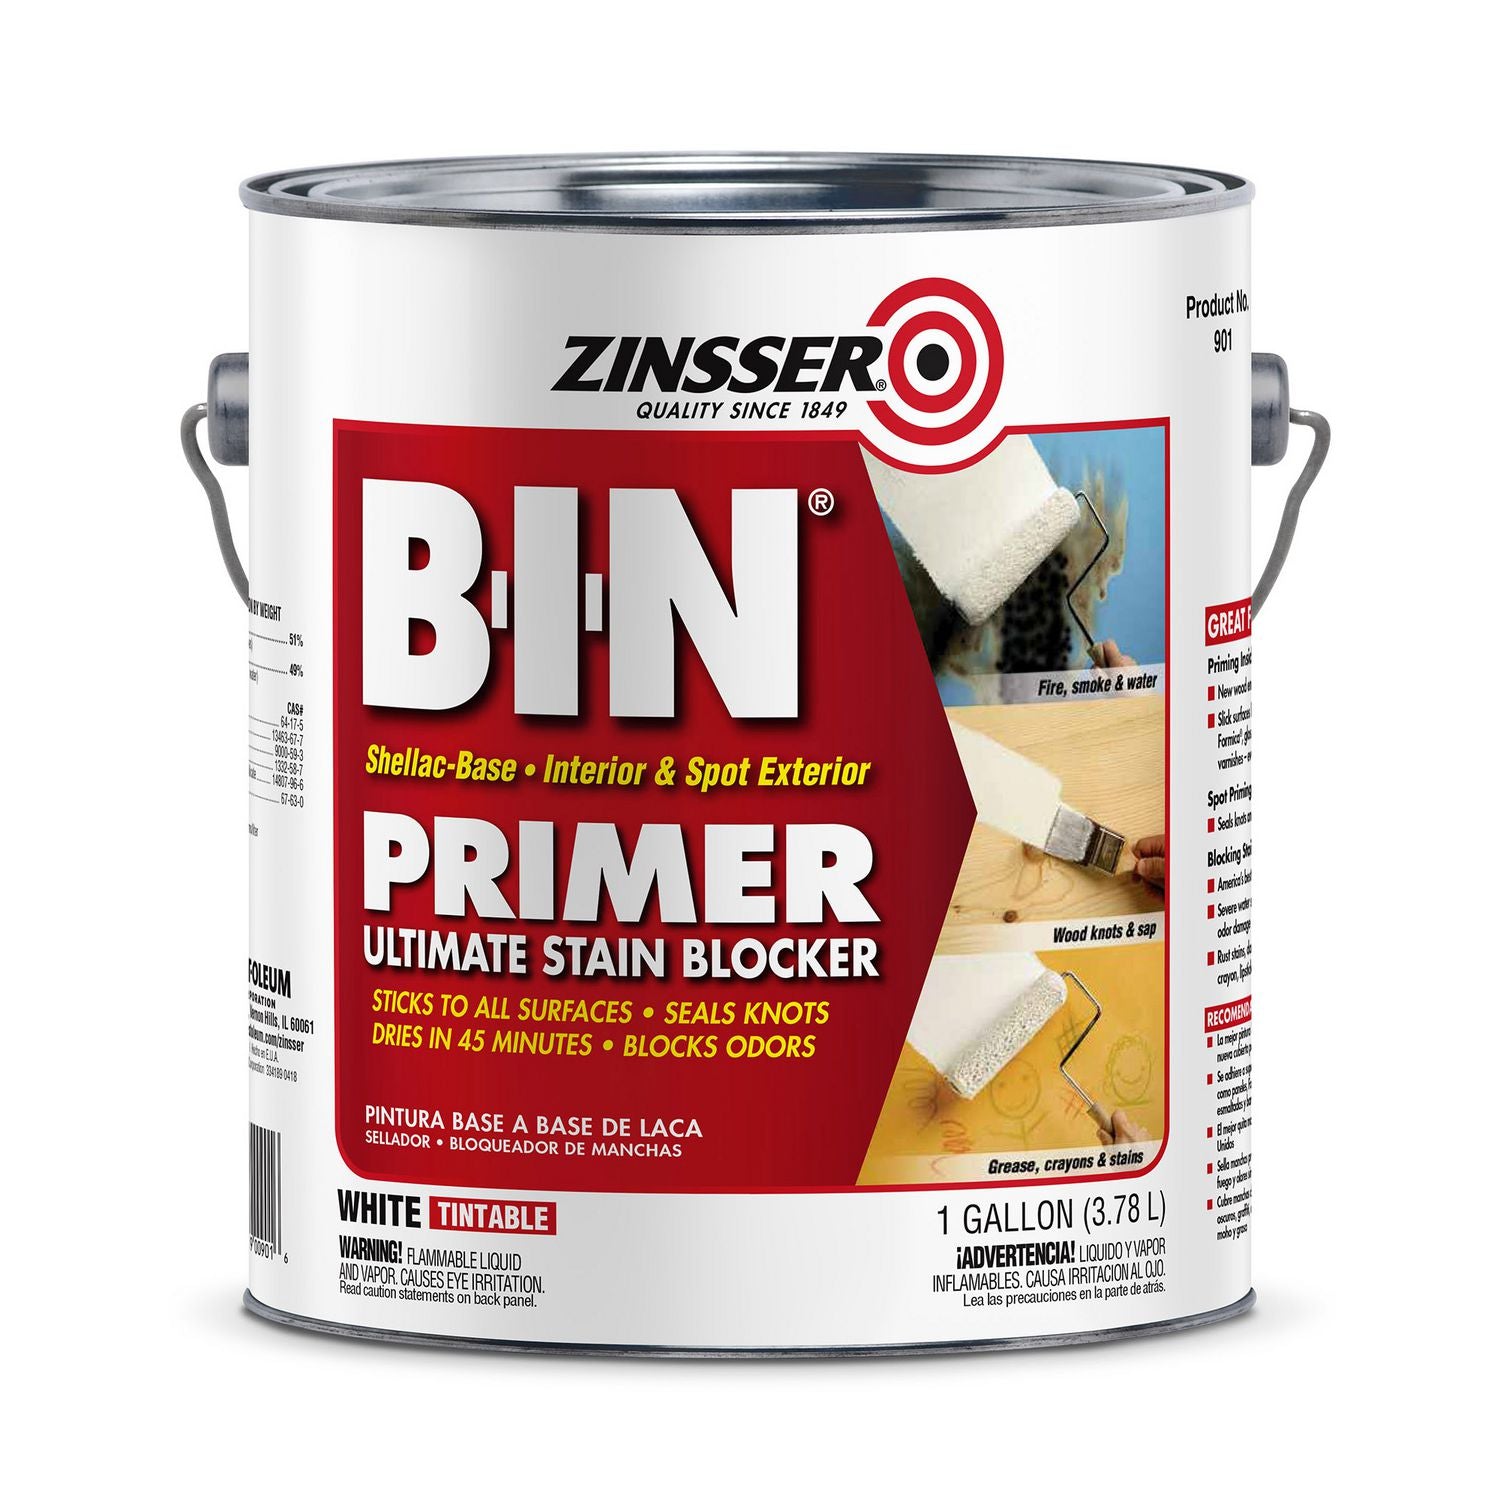 bin-shellac-base-interior-and-spot-exterior-primer-flat-white-1-gal-bucket-pail-2-carton_rst320991ct - 1